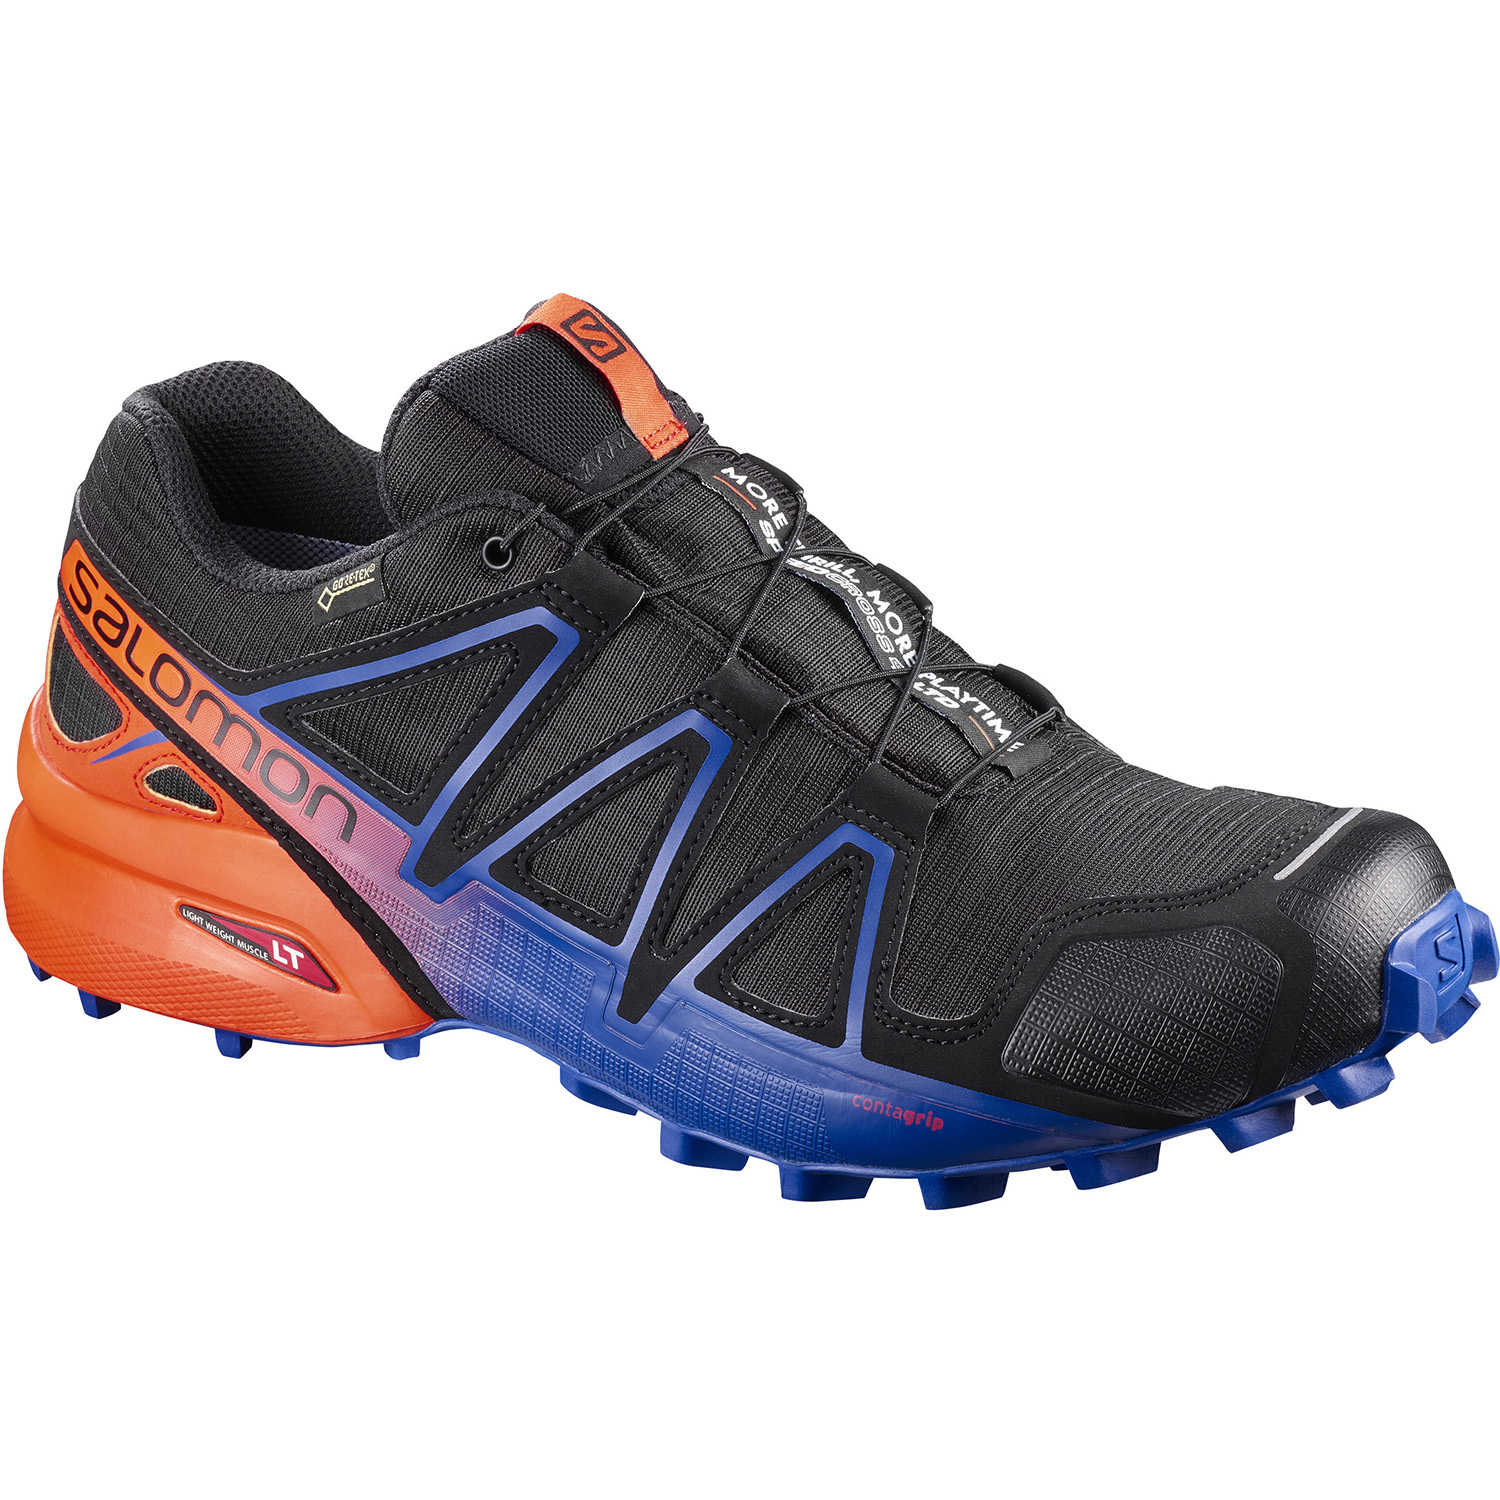 Chaussures Trail Speedcross 4 GTX Limited Edition - Black/Scarlet